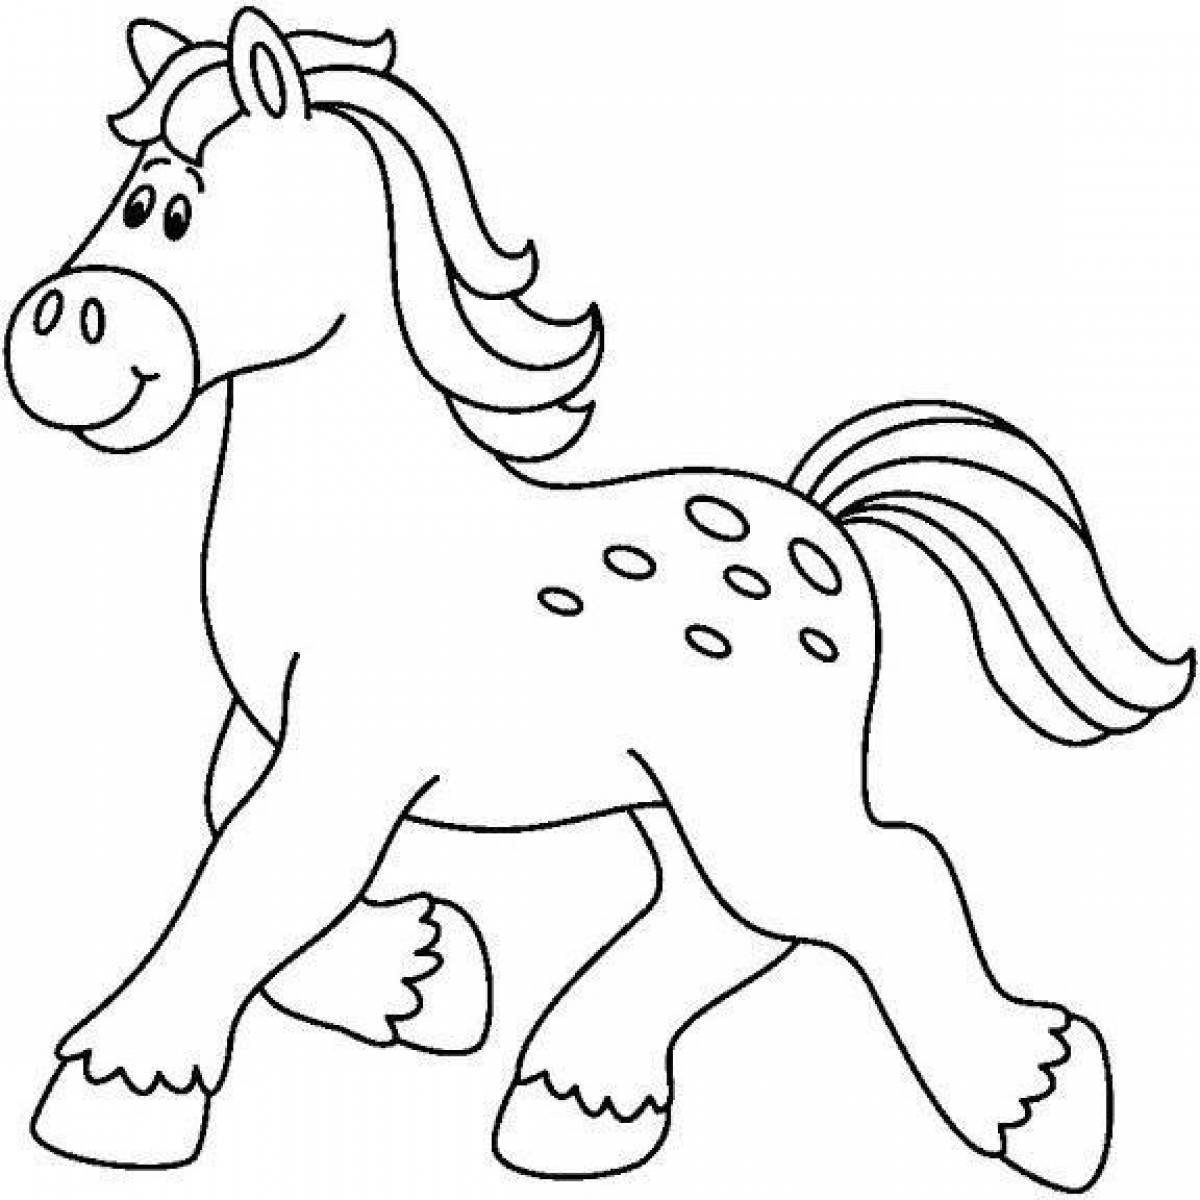 Coloring energetic quarterhorse horse for kids